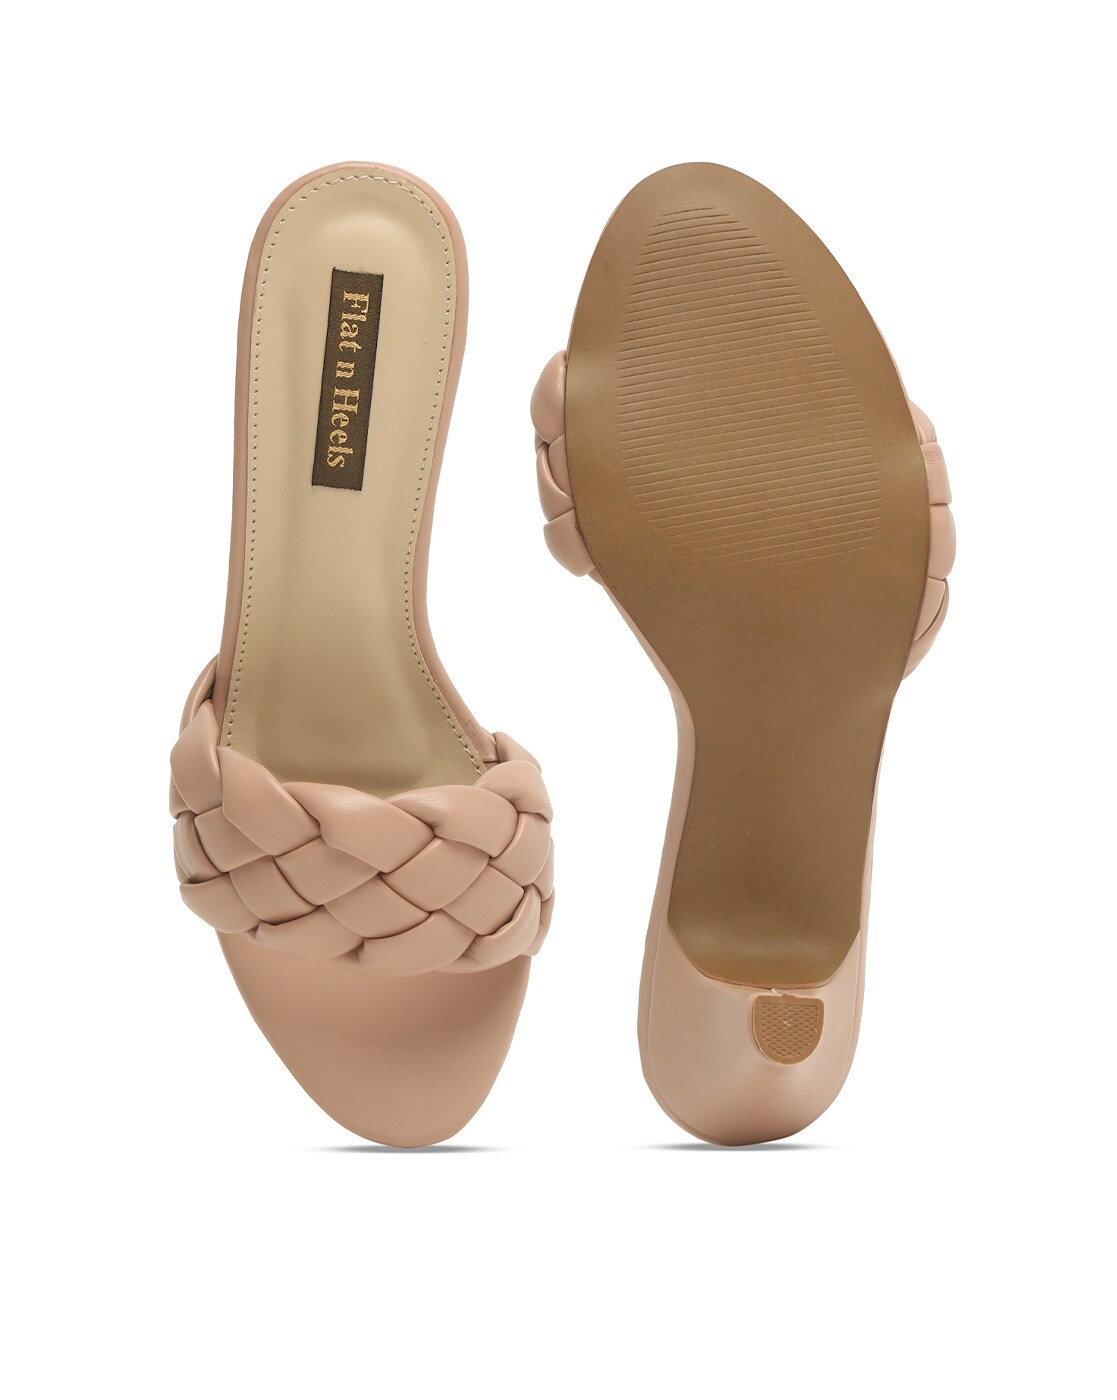 Buy Pink Heeled Sandals for Women by Flat n Heels Online